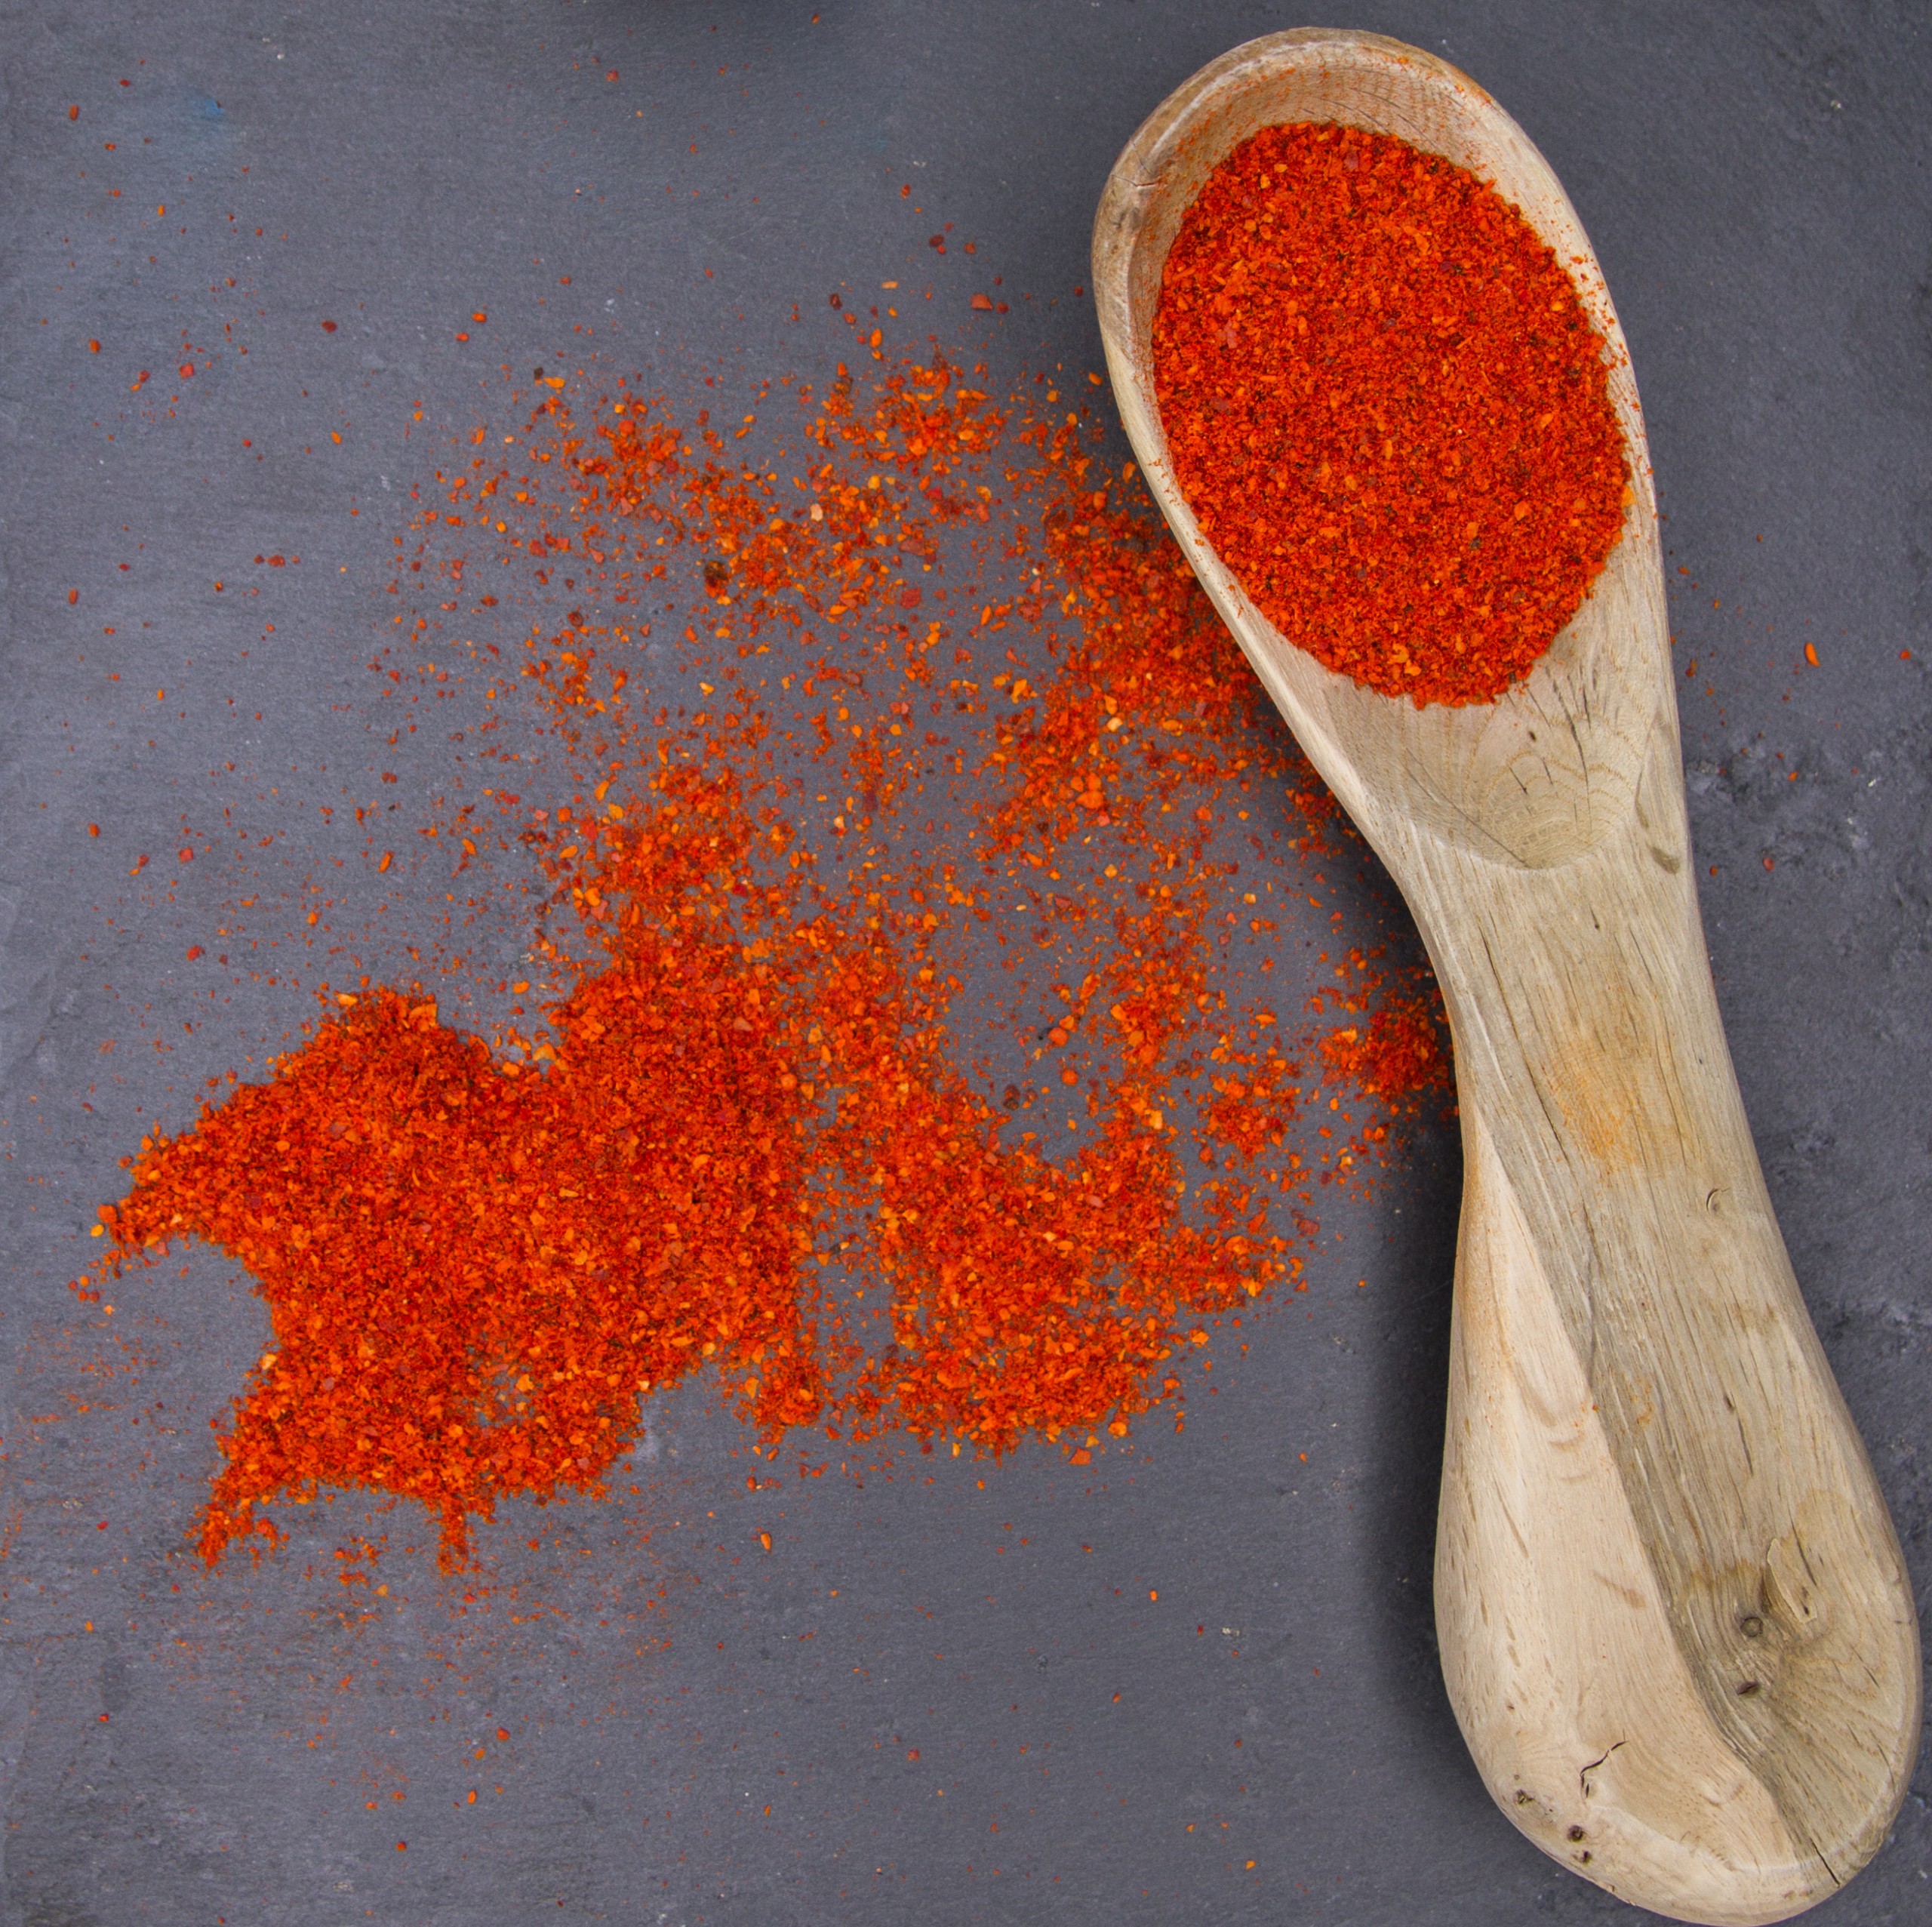  Piment d'Espelette - Red Chili Pepper Powder from